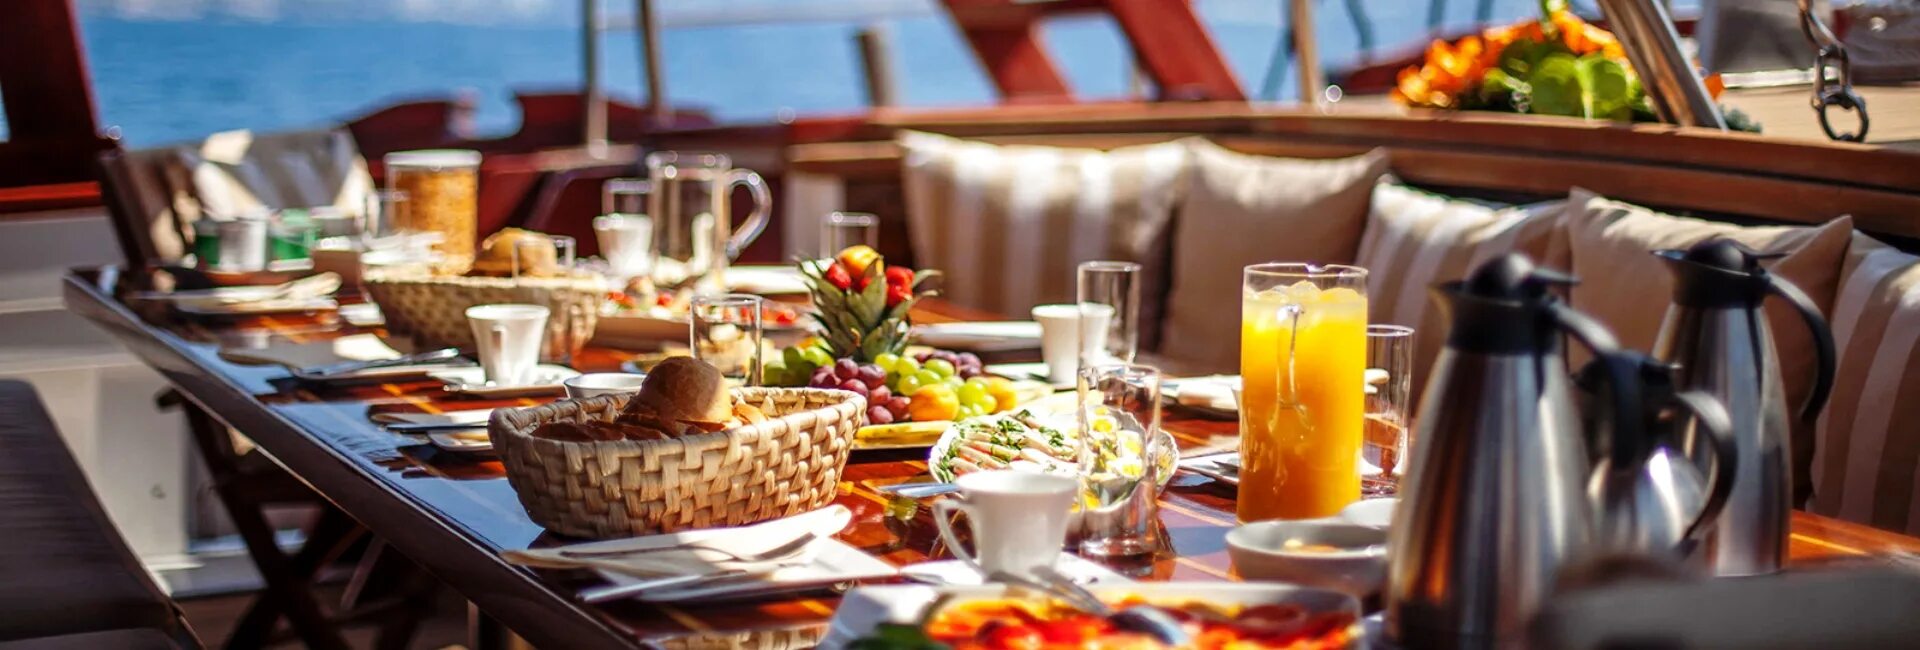 Утро палуба. Завтрак на лайнере. Завтрак на круизном лайнере. Еда на круизном лайнере. Ресторан на палубе корабля.